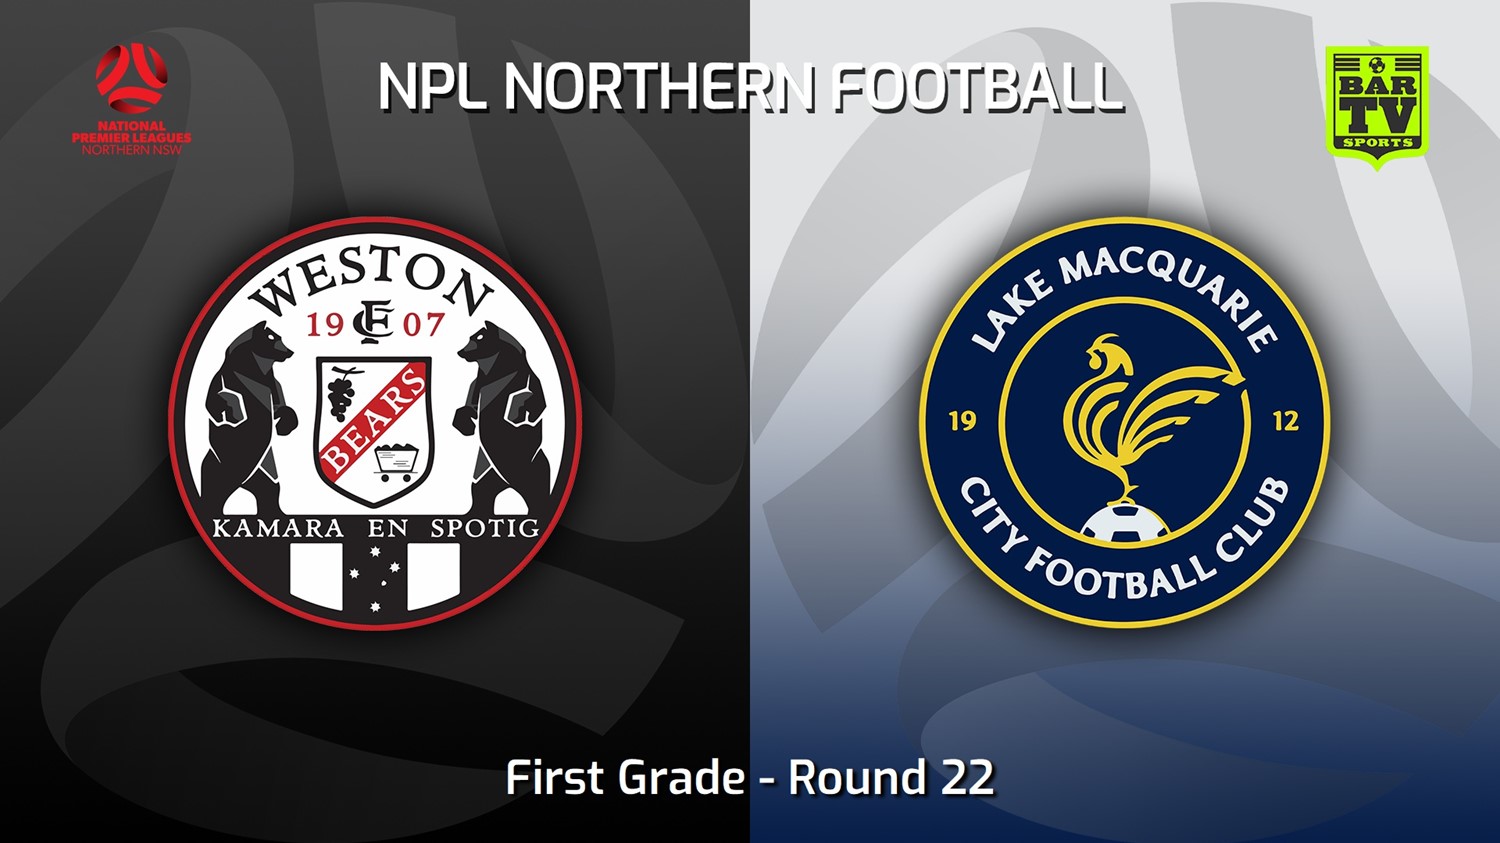 220821-NNSW NPLM Round 22 - Weston Workers FC v Lake Macquarie City FC (1) Minigame Slate Image